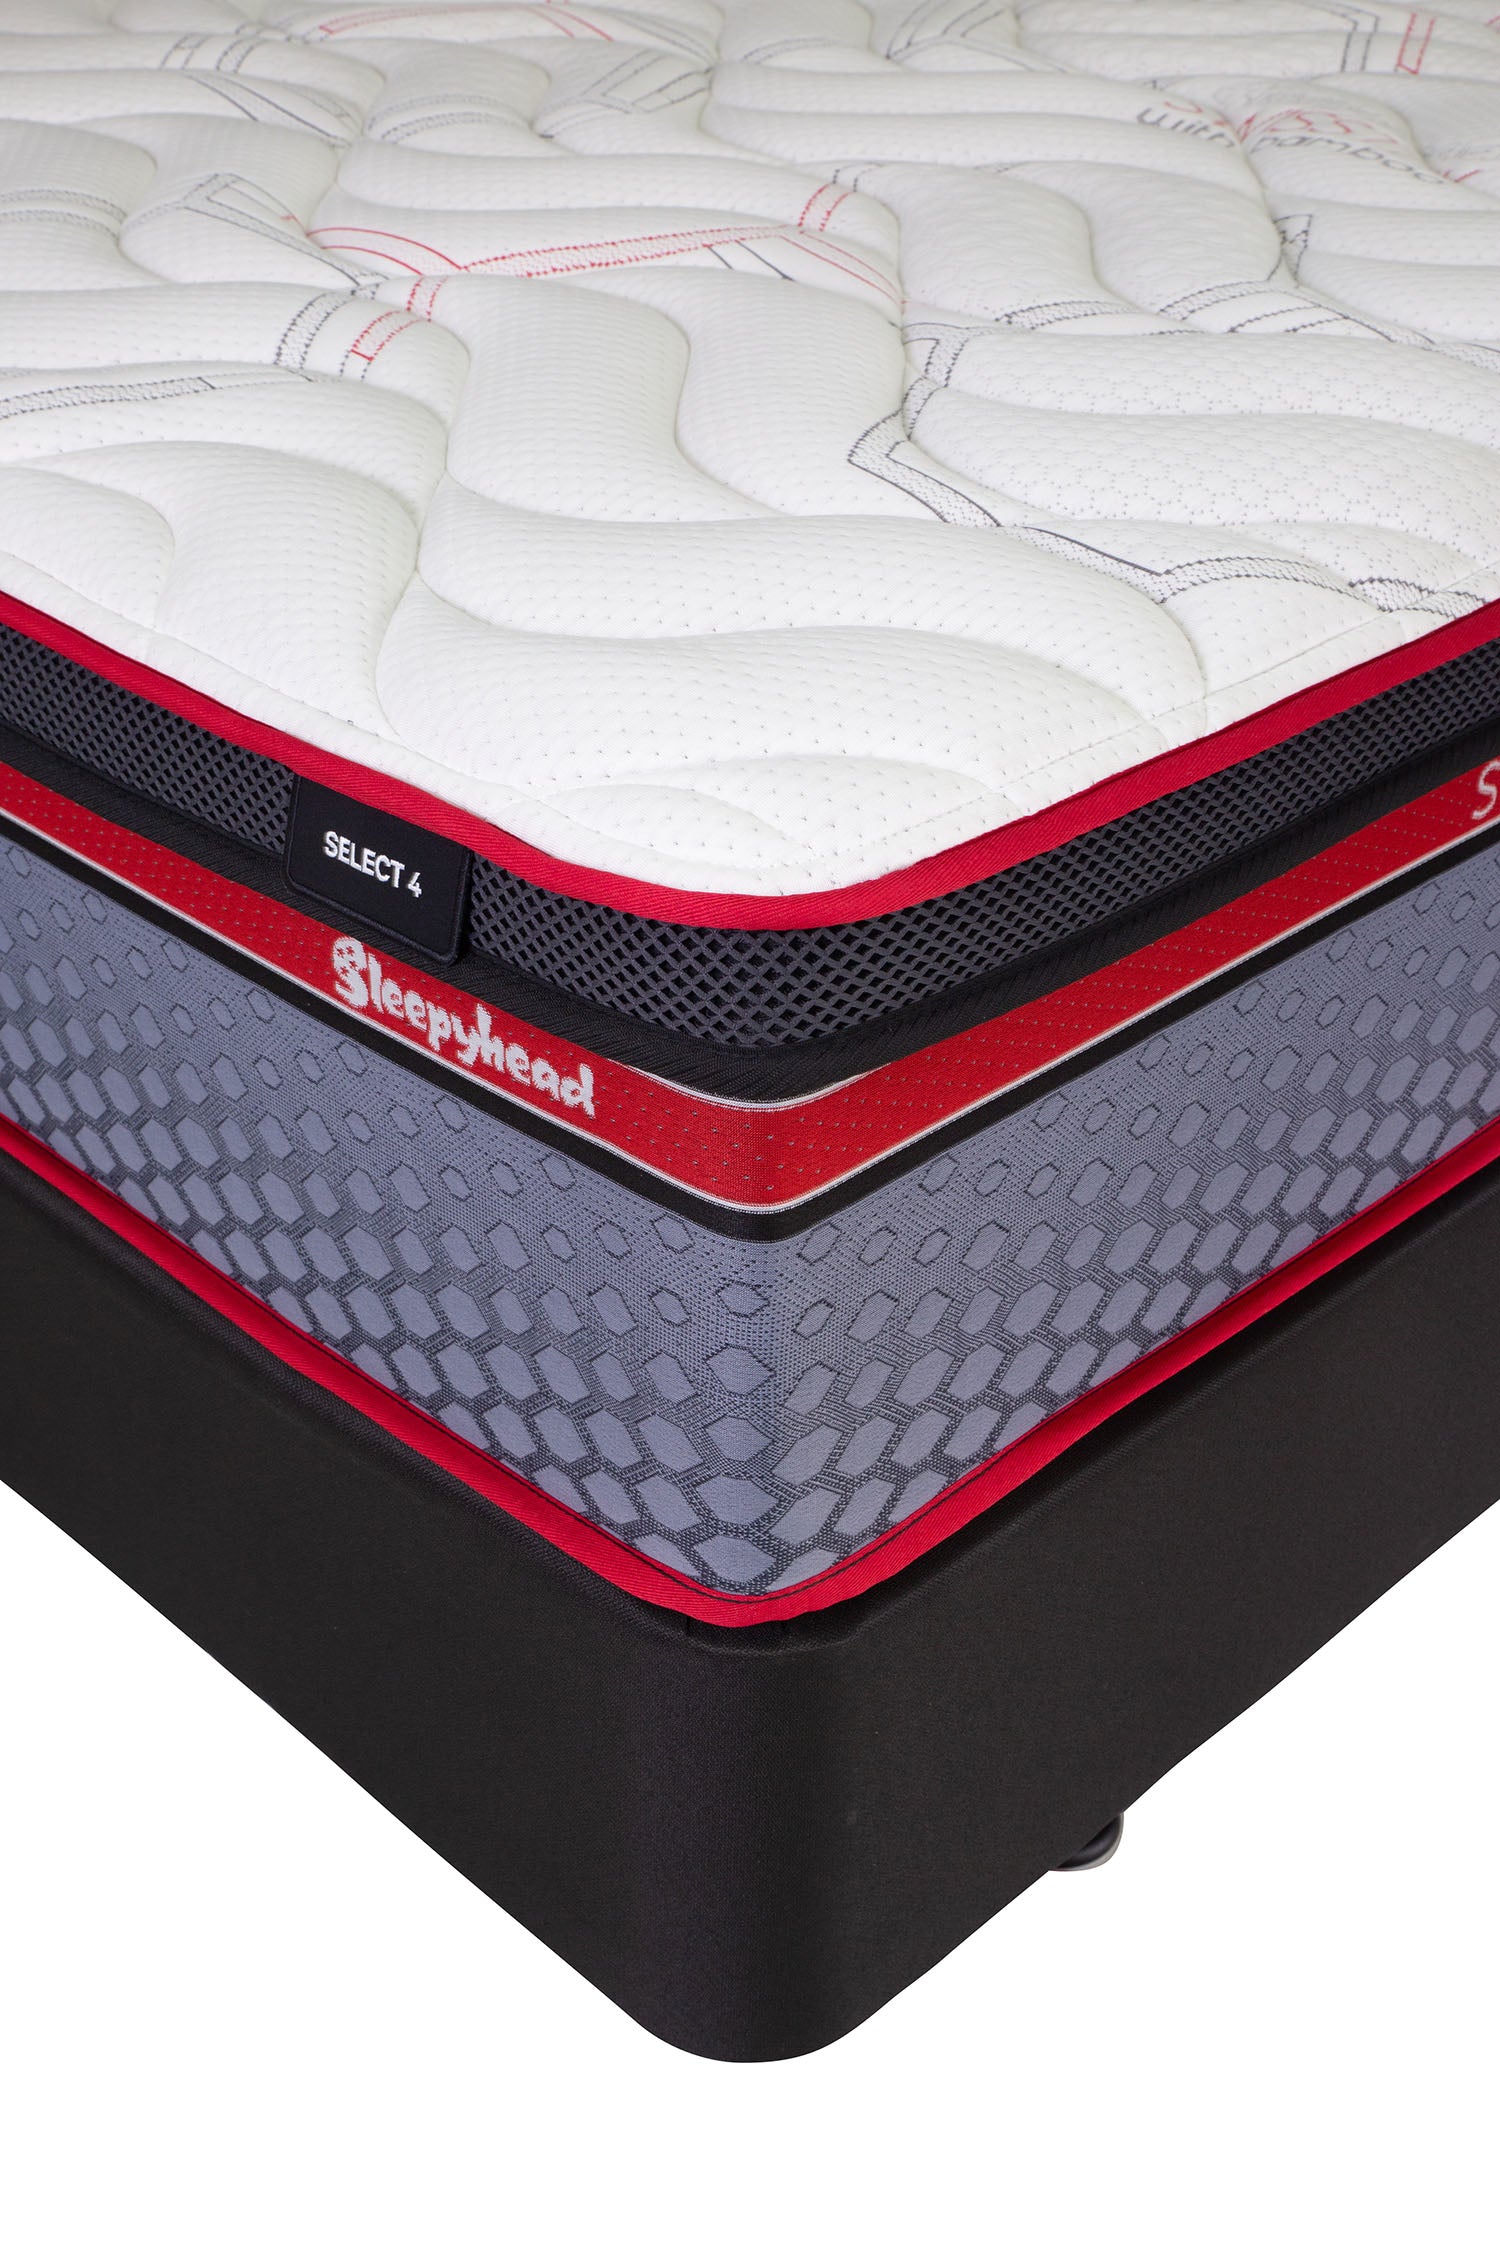 select4-cali-king-mattress-3